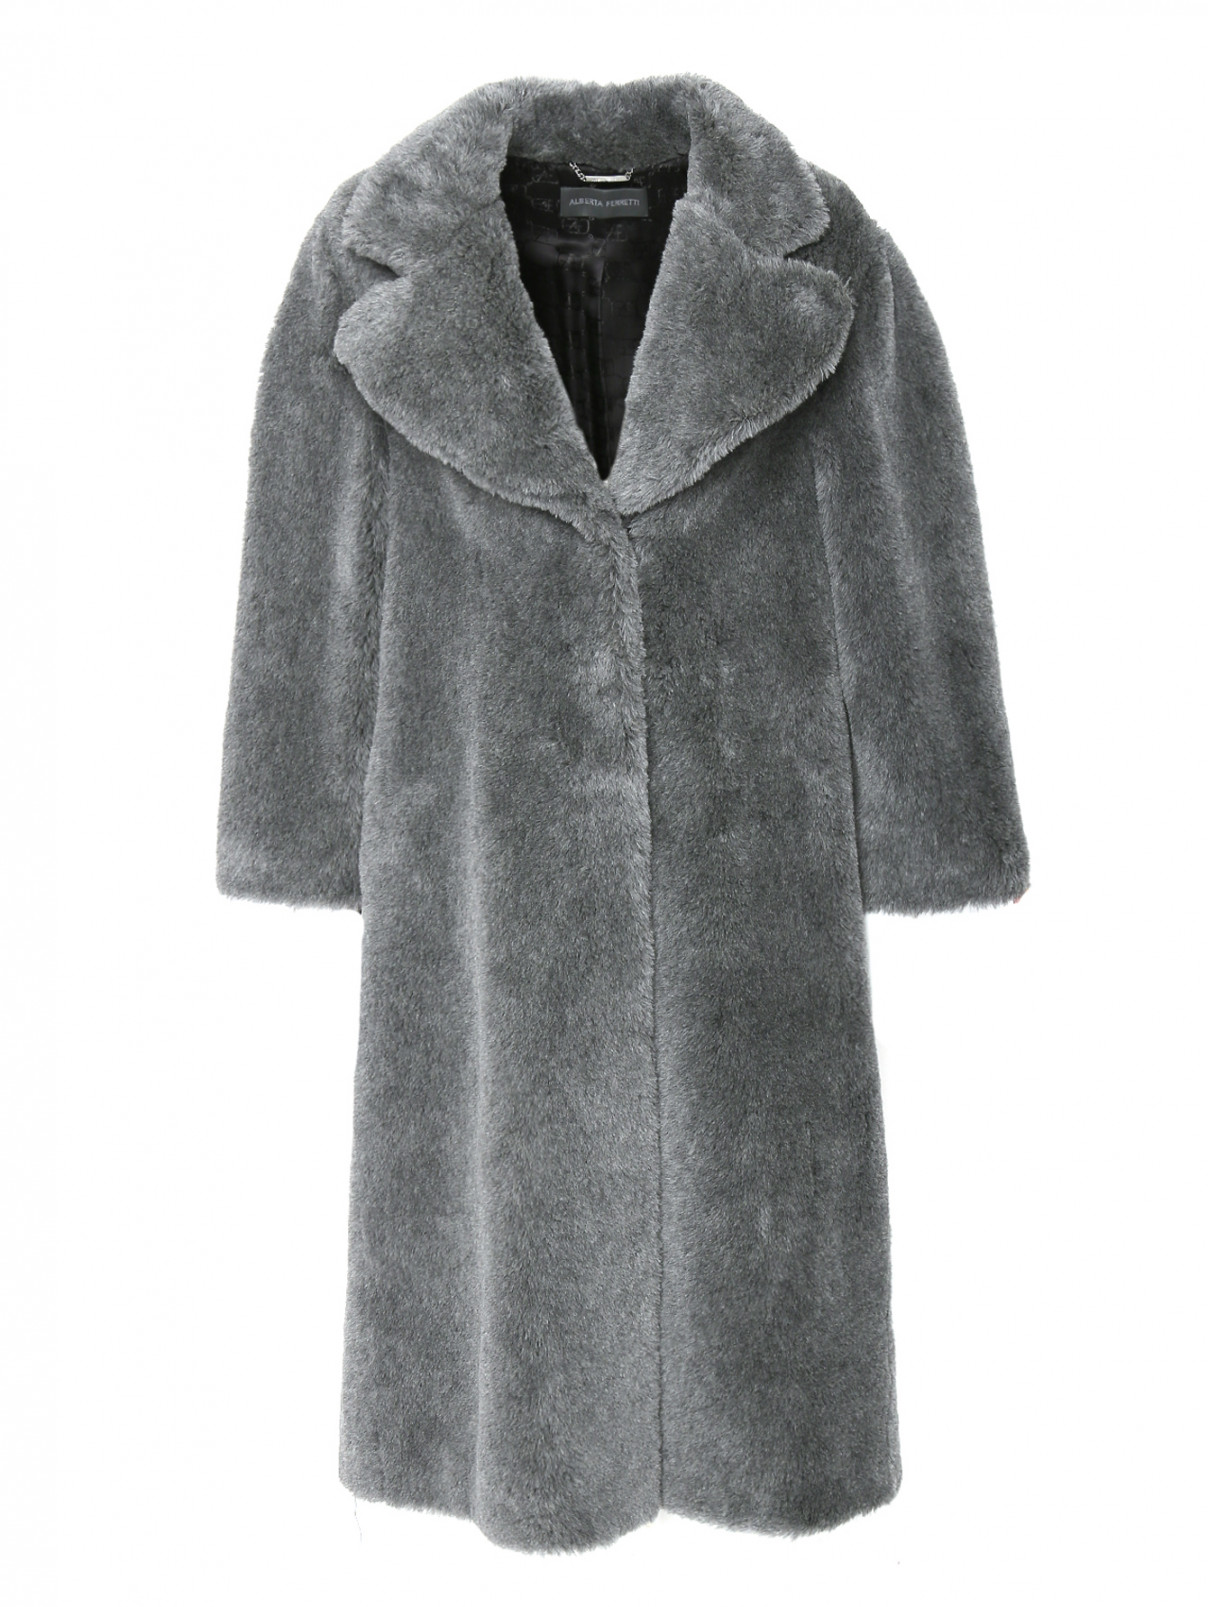 Шуба из шерсти с карманами Alberta Ferretti  –  Общий вид  – Цвет:  Серый